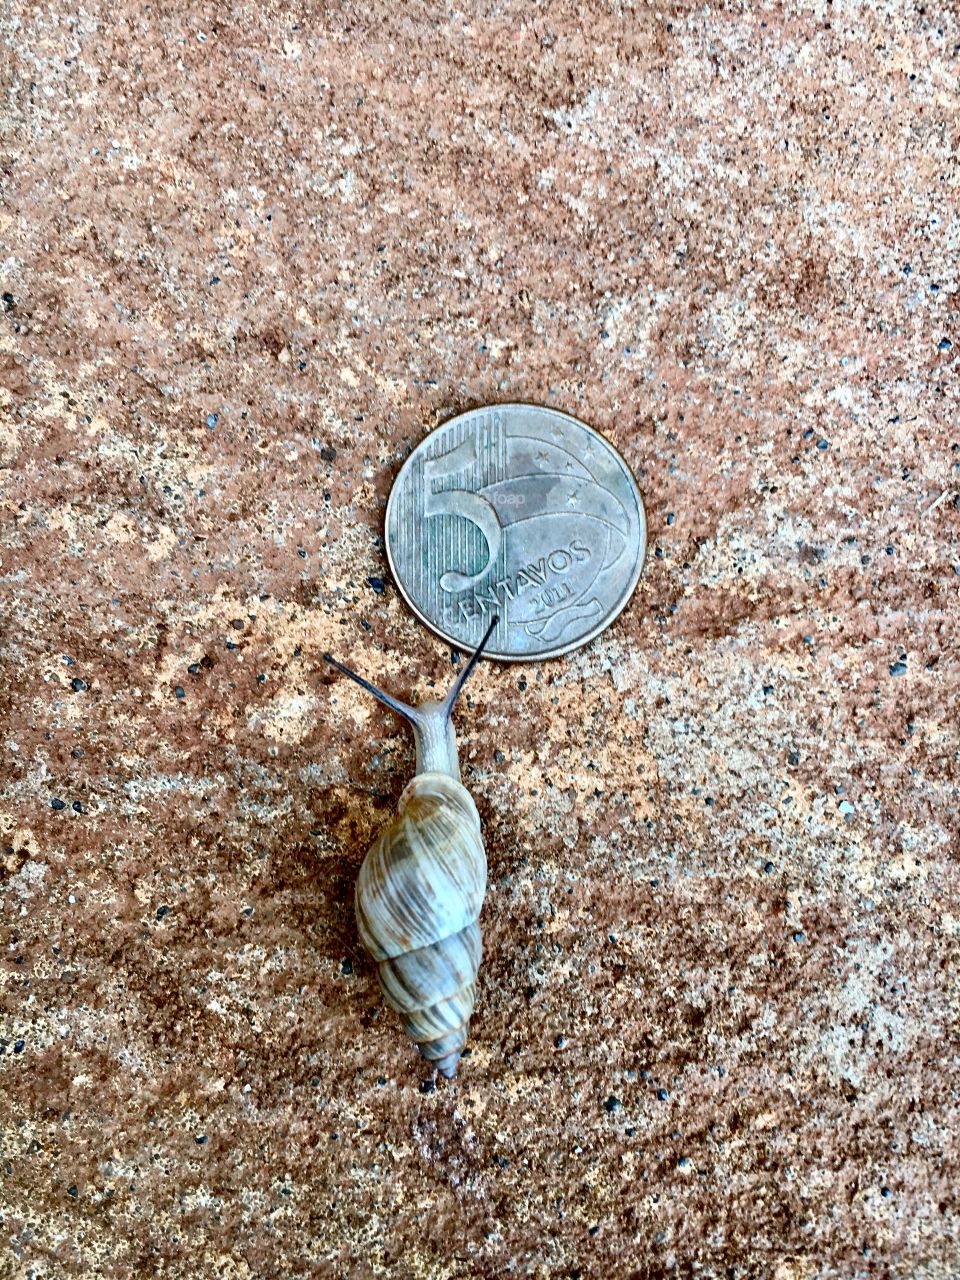 Mini snail